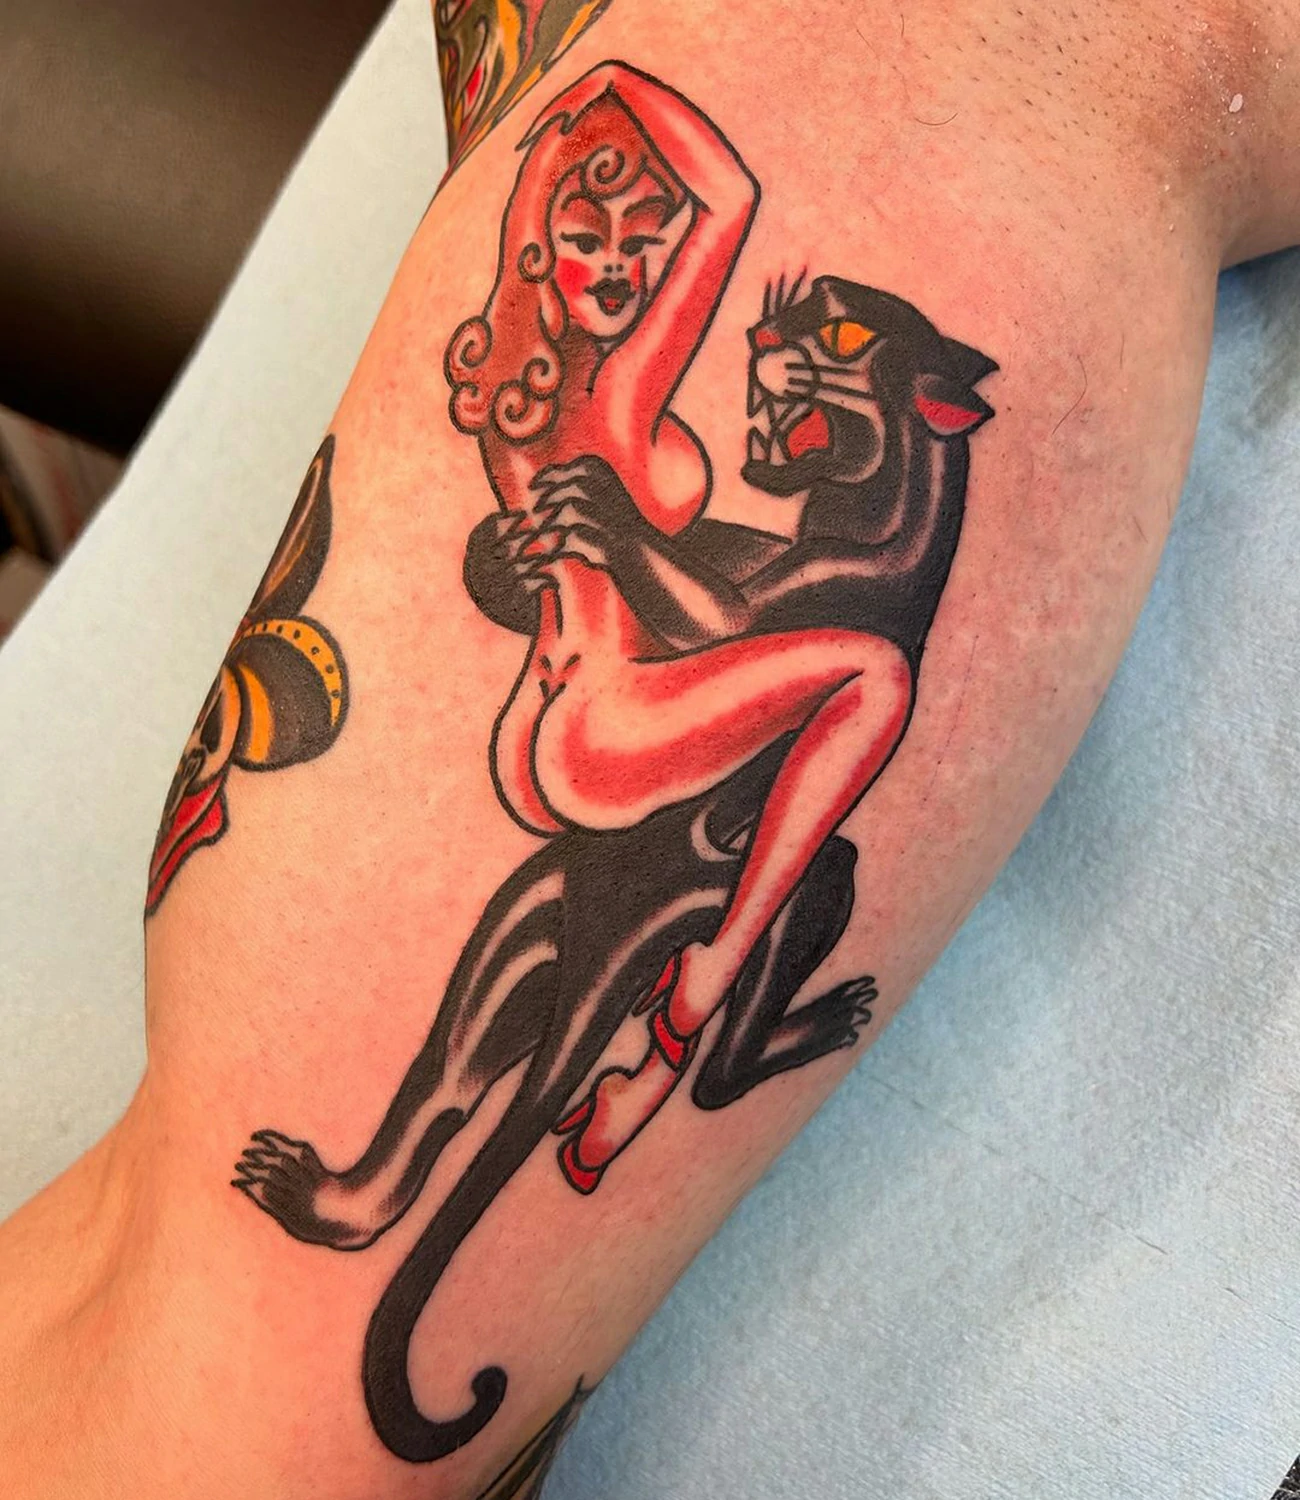 Sailor Jerry Traditional Panther Tattoo